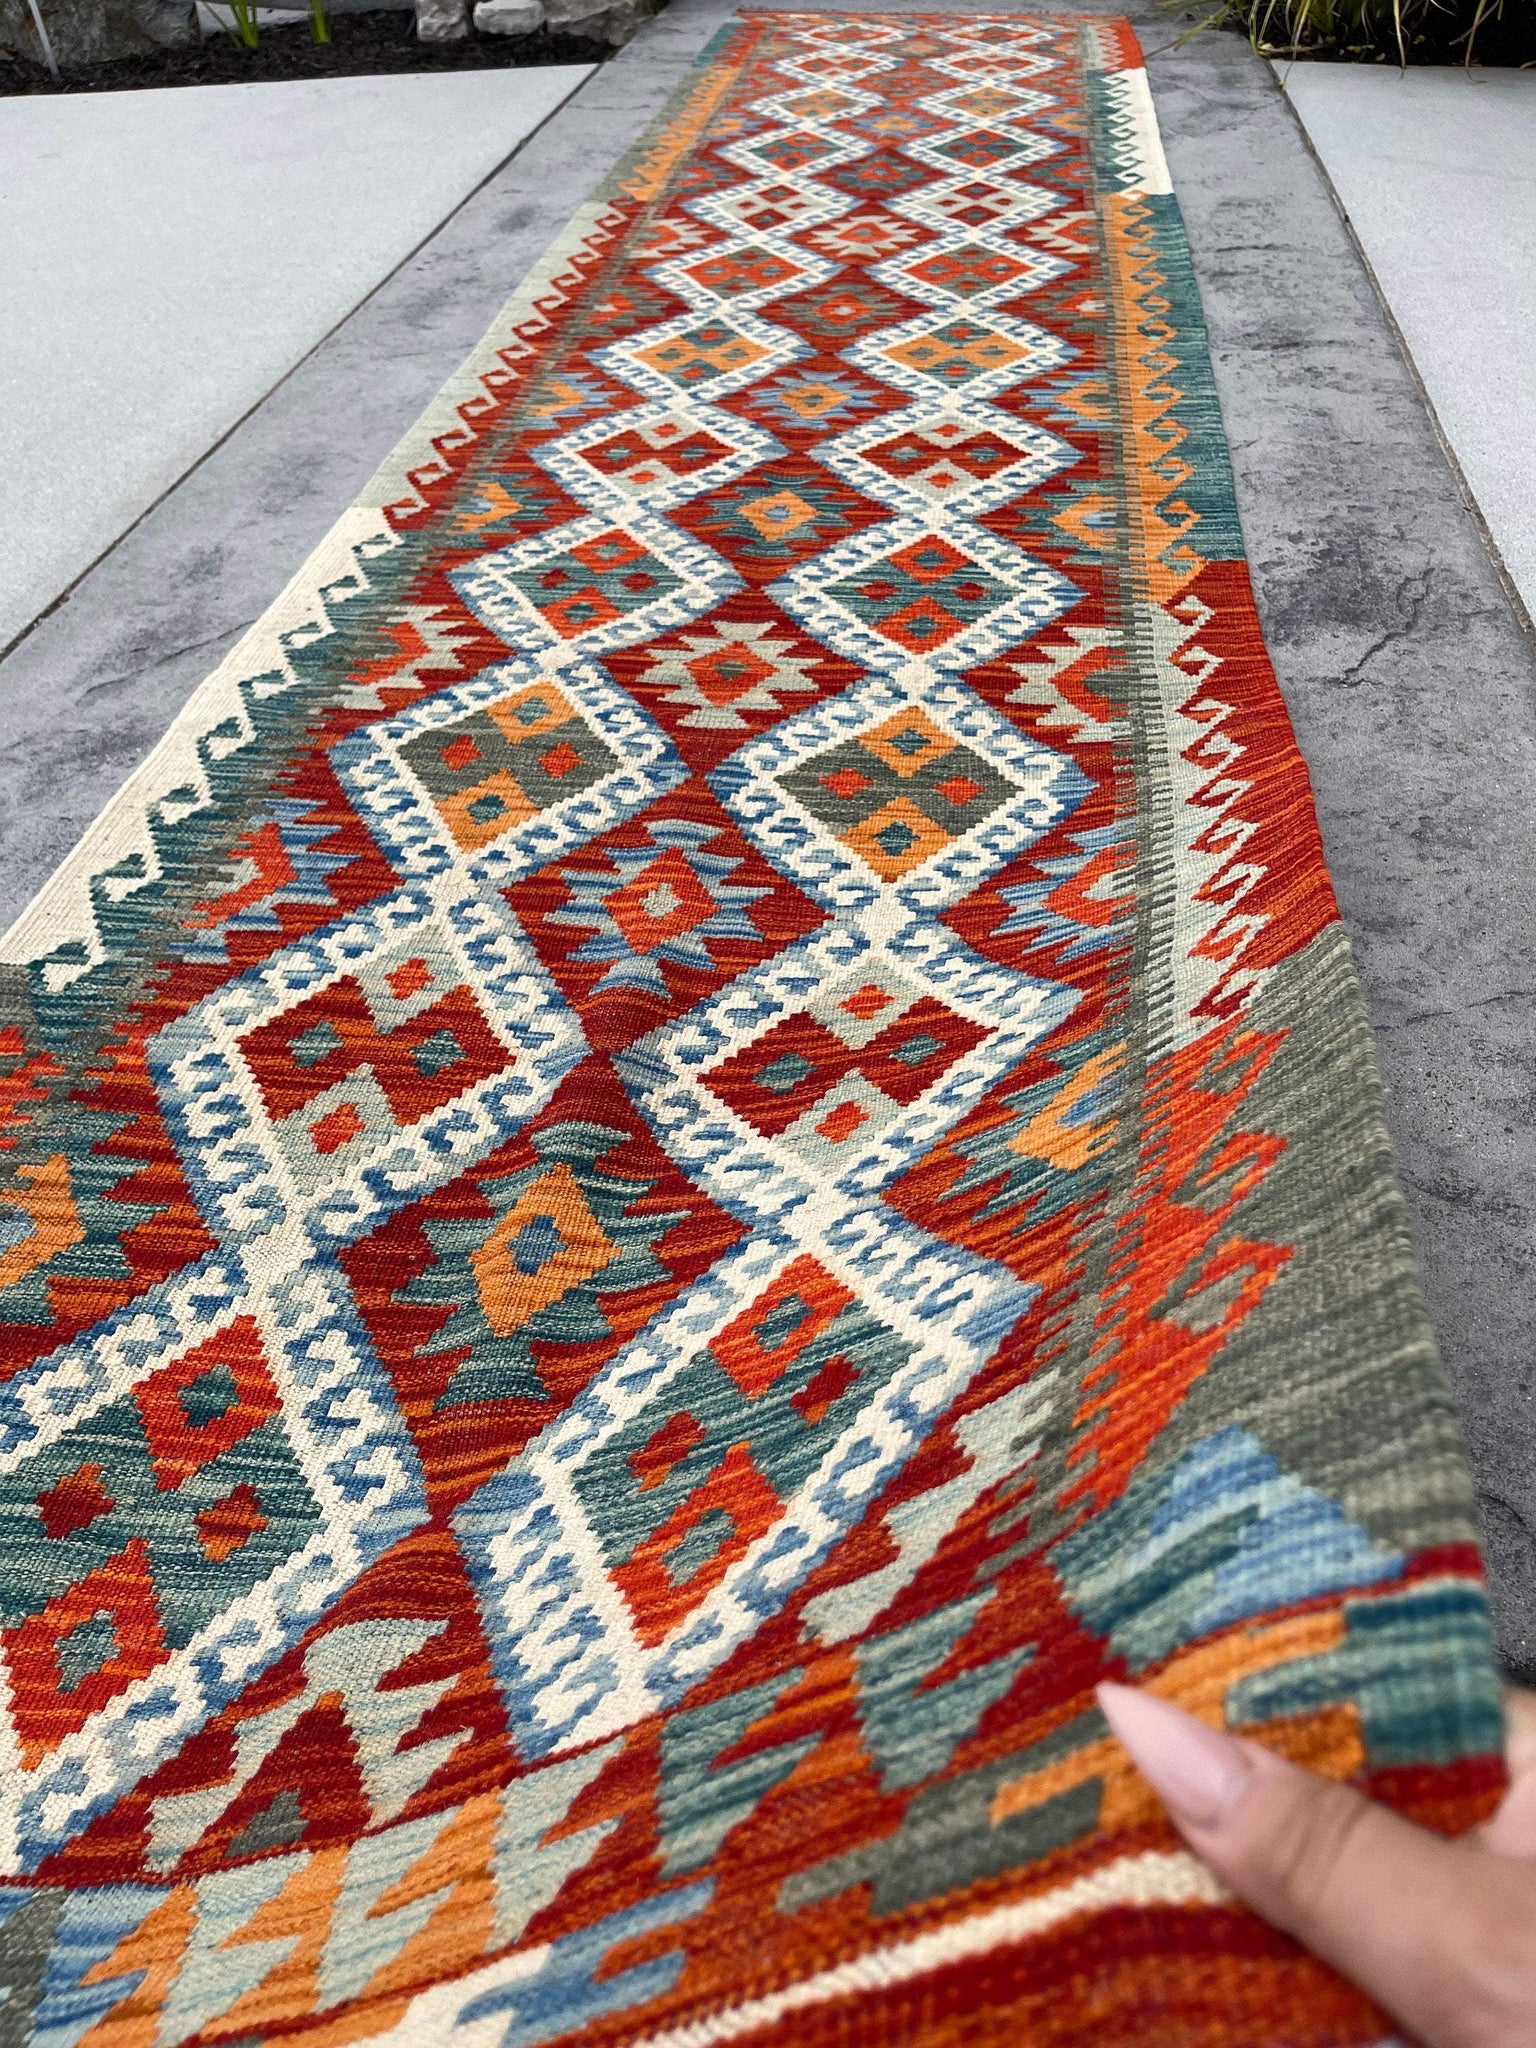 3x13 (90x395) Handmade Afghan Kilim Rug Runner | Red Orange Ivory Blue Green Turquoise | Flatweave Flat Weave Tribal Oriental Boho Wool